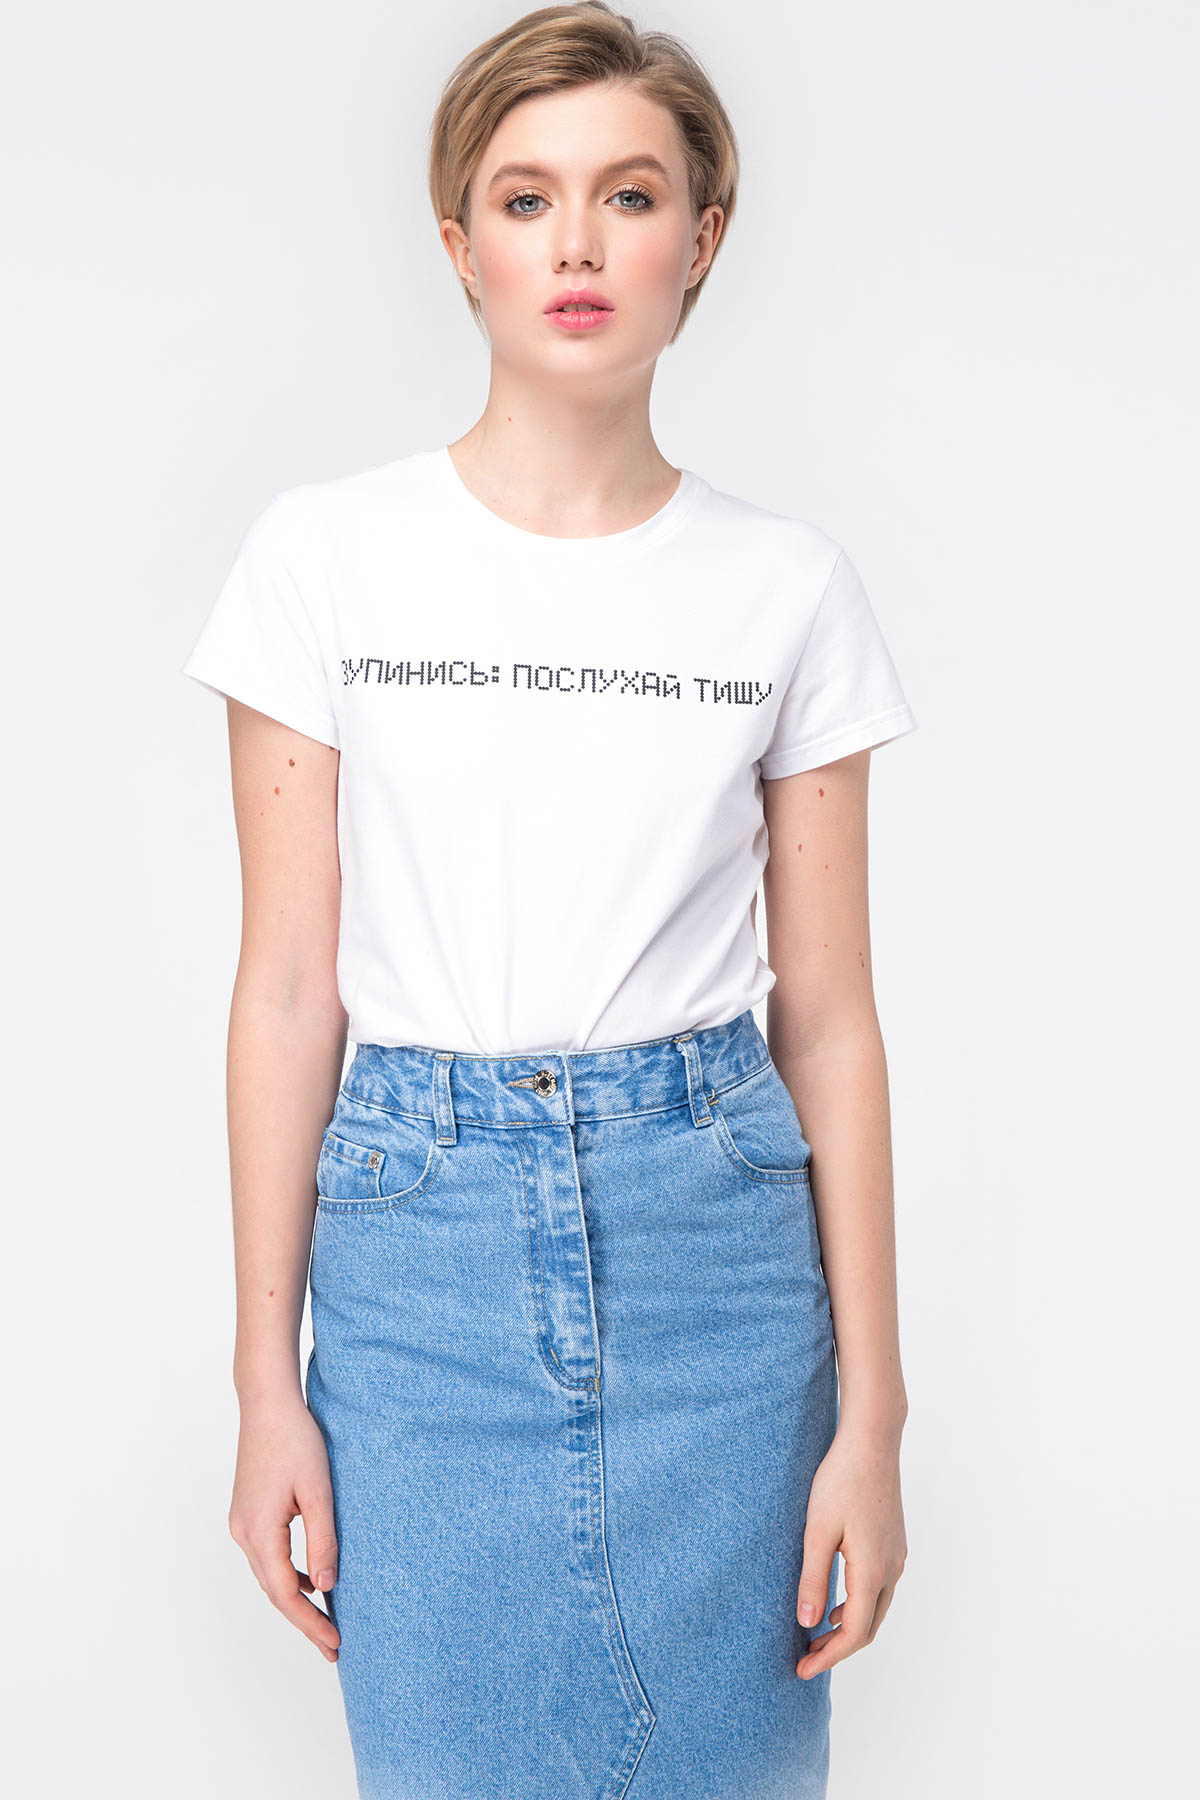 White T-shirt with a print «Зупинись: послухай тишу», photo 2